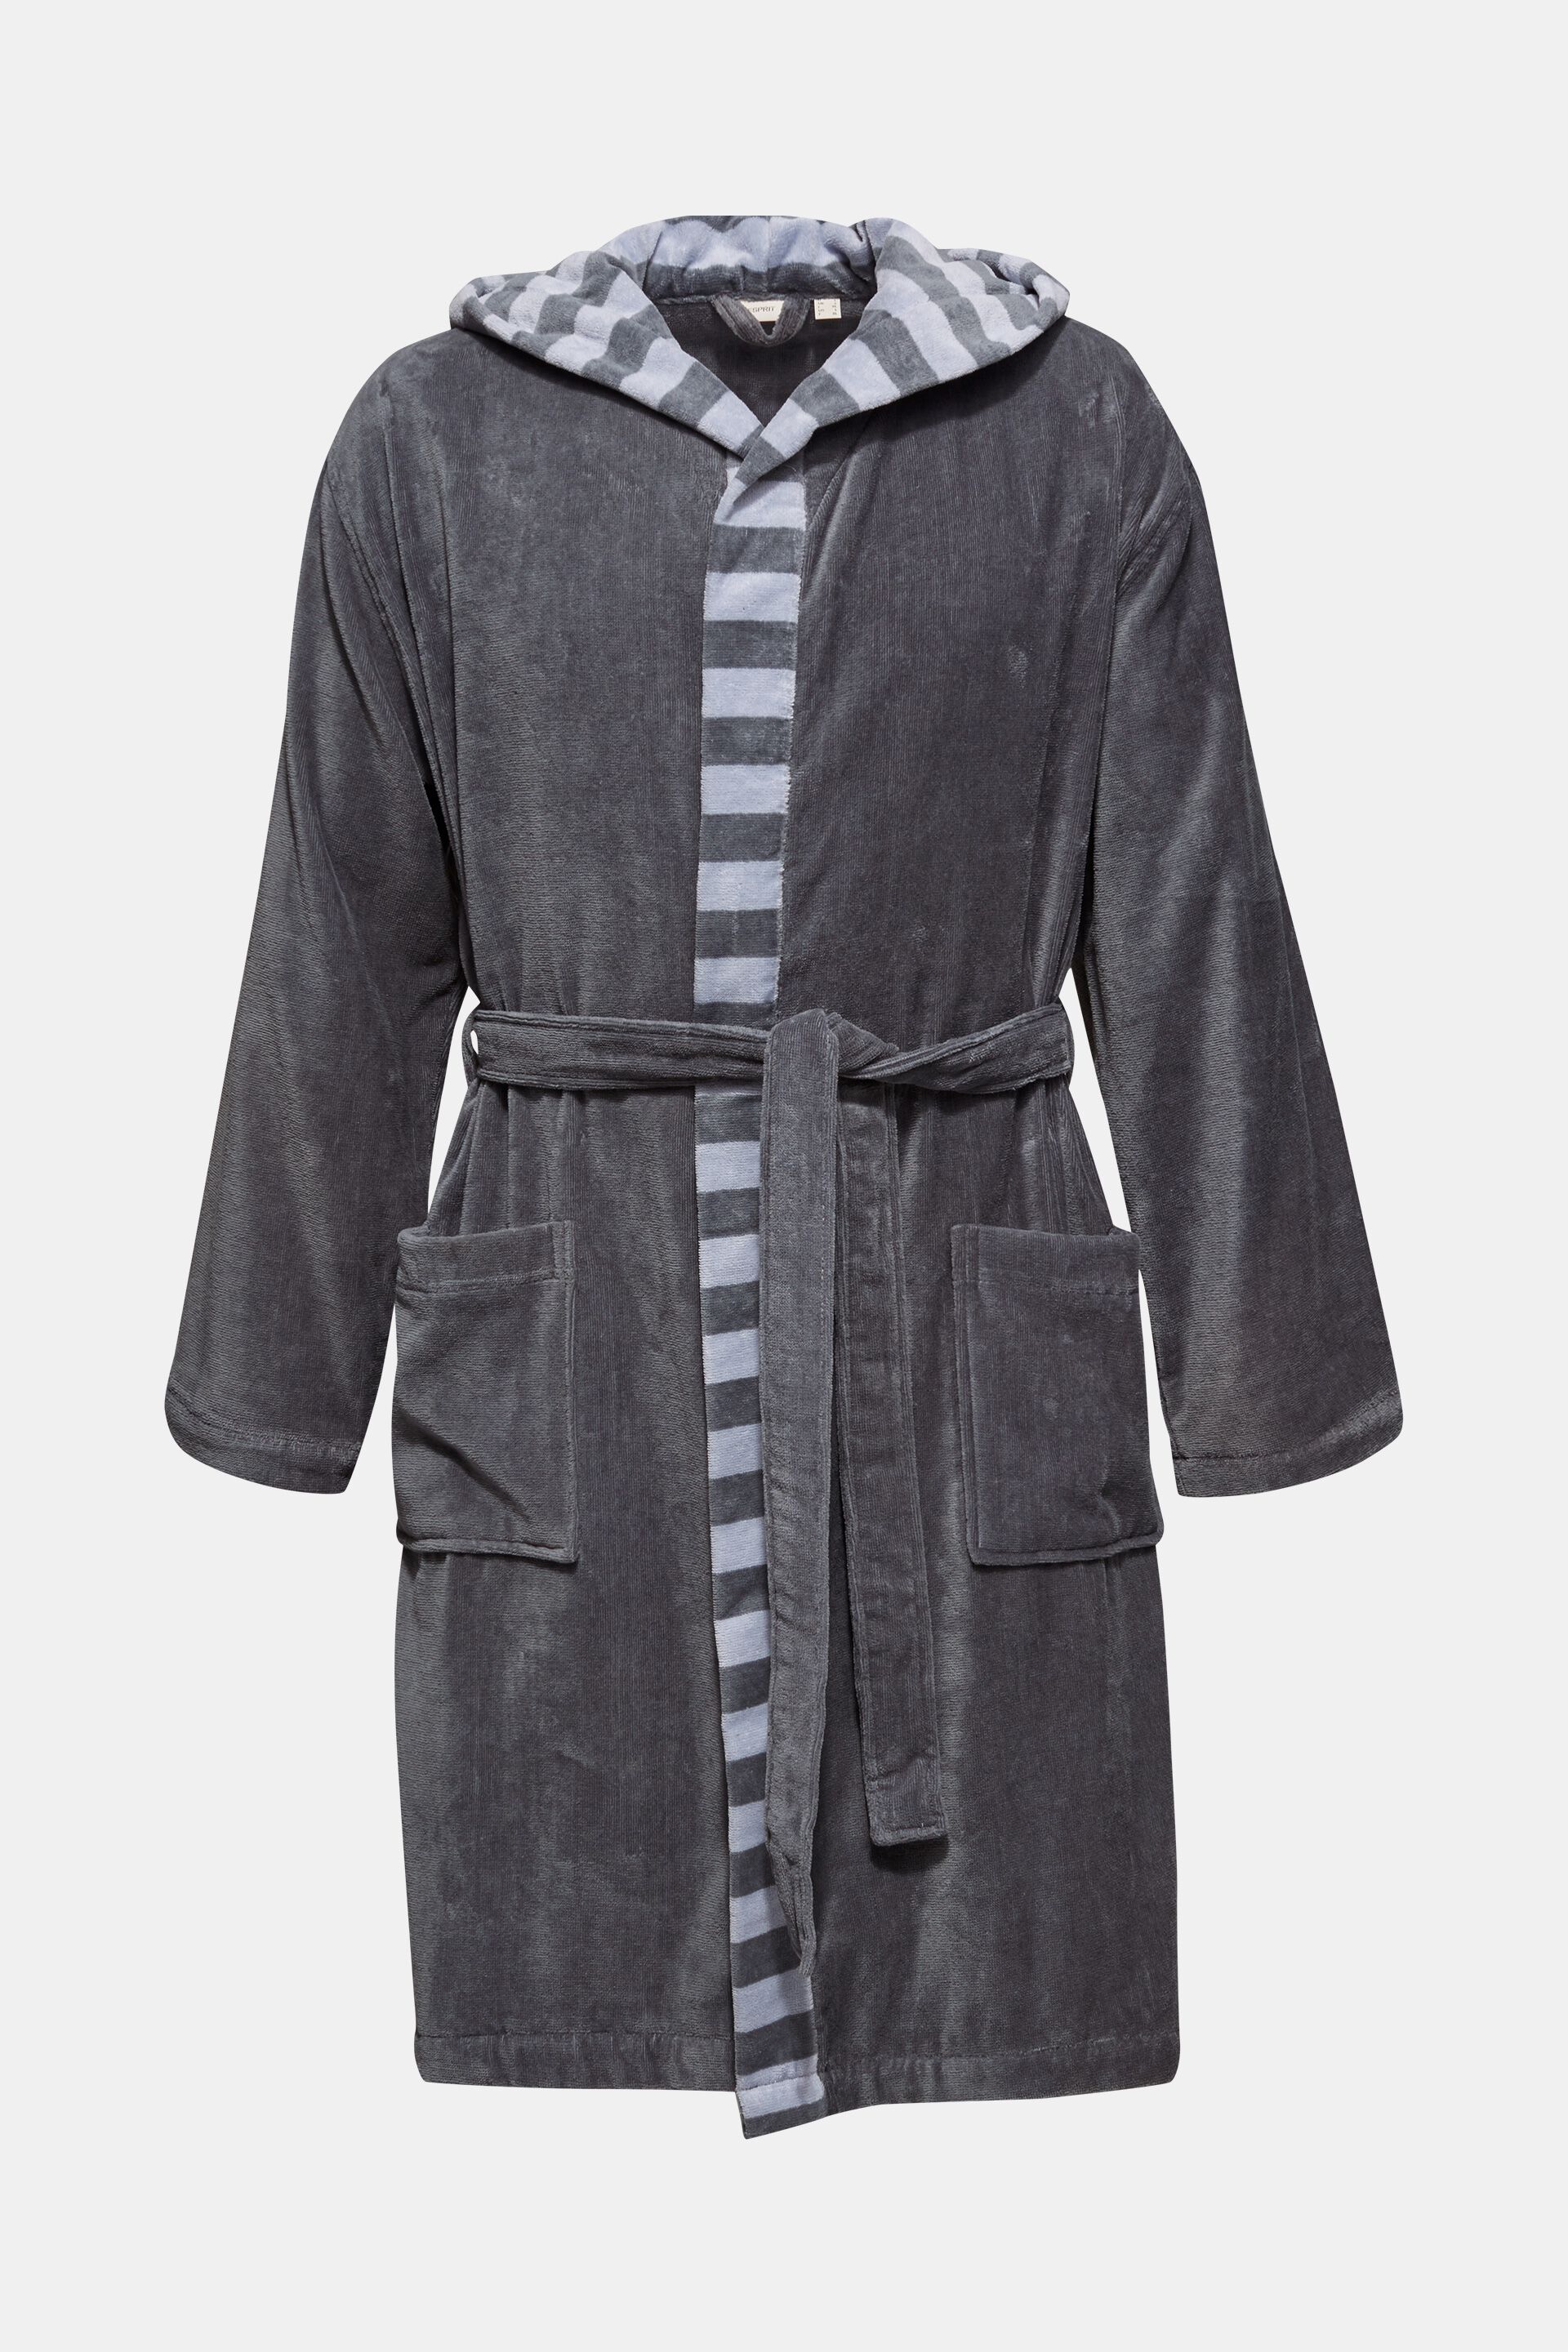 Esprit 100% striped bathrobe, cotton Mens